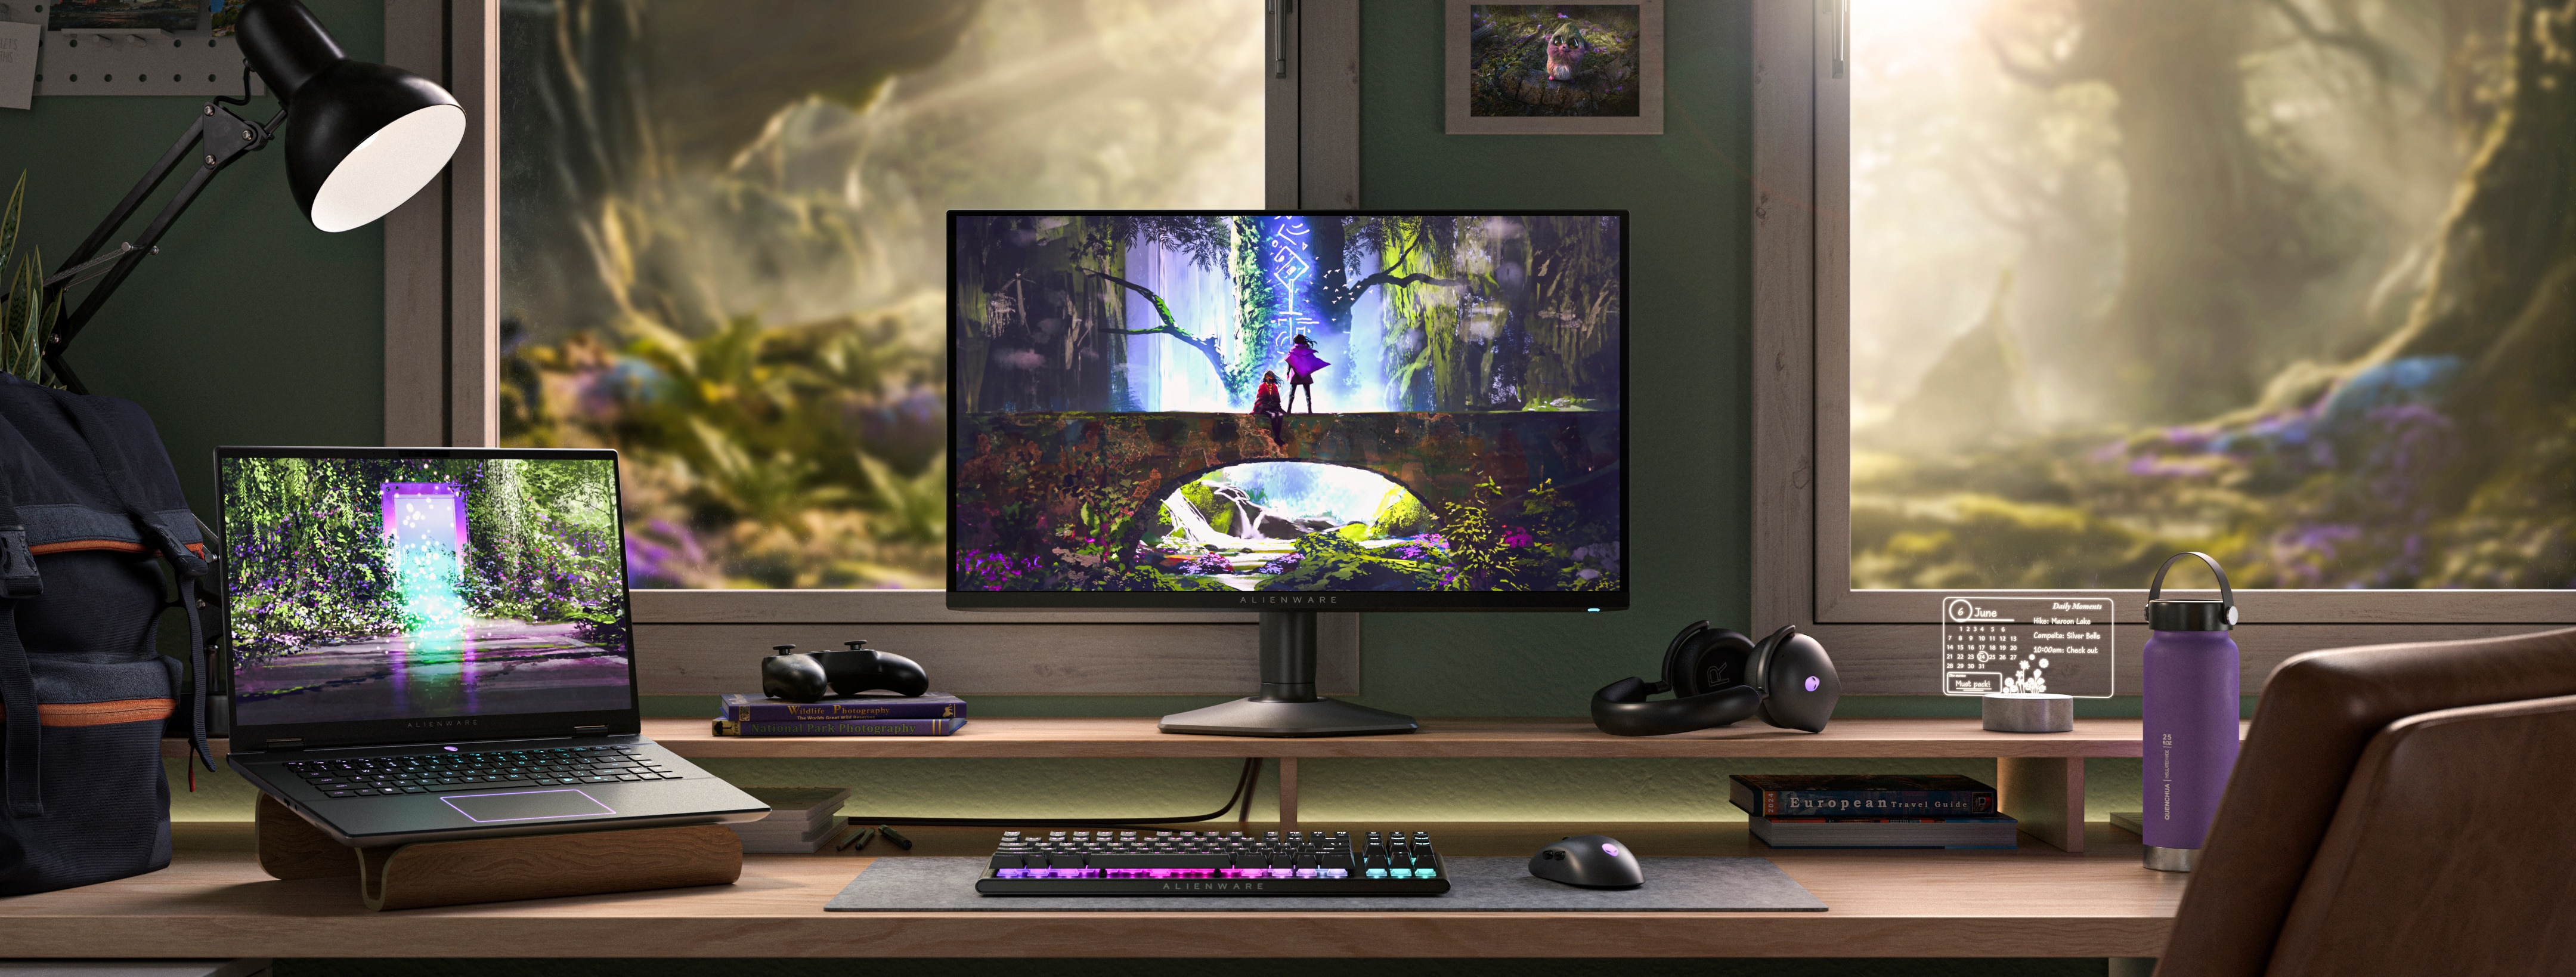 Alienware Dream Desk Gaming Nomad - Front